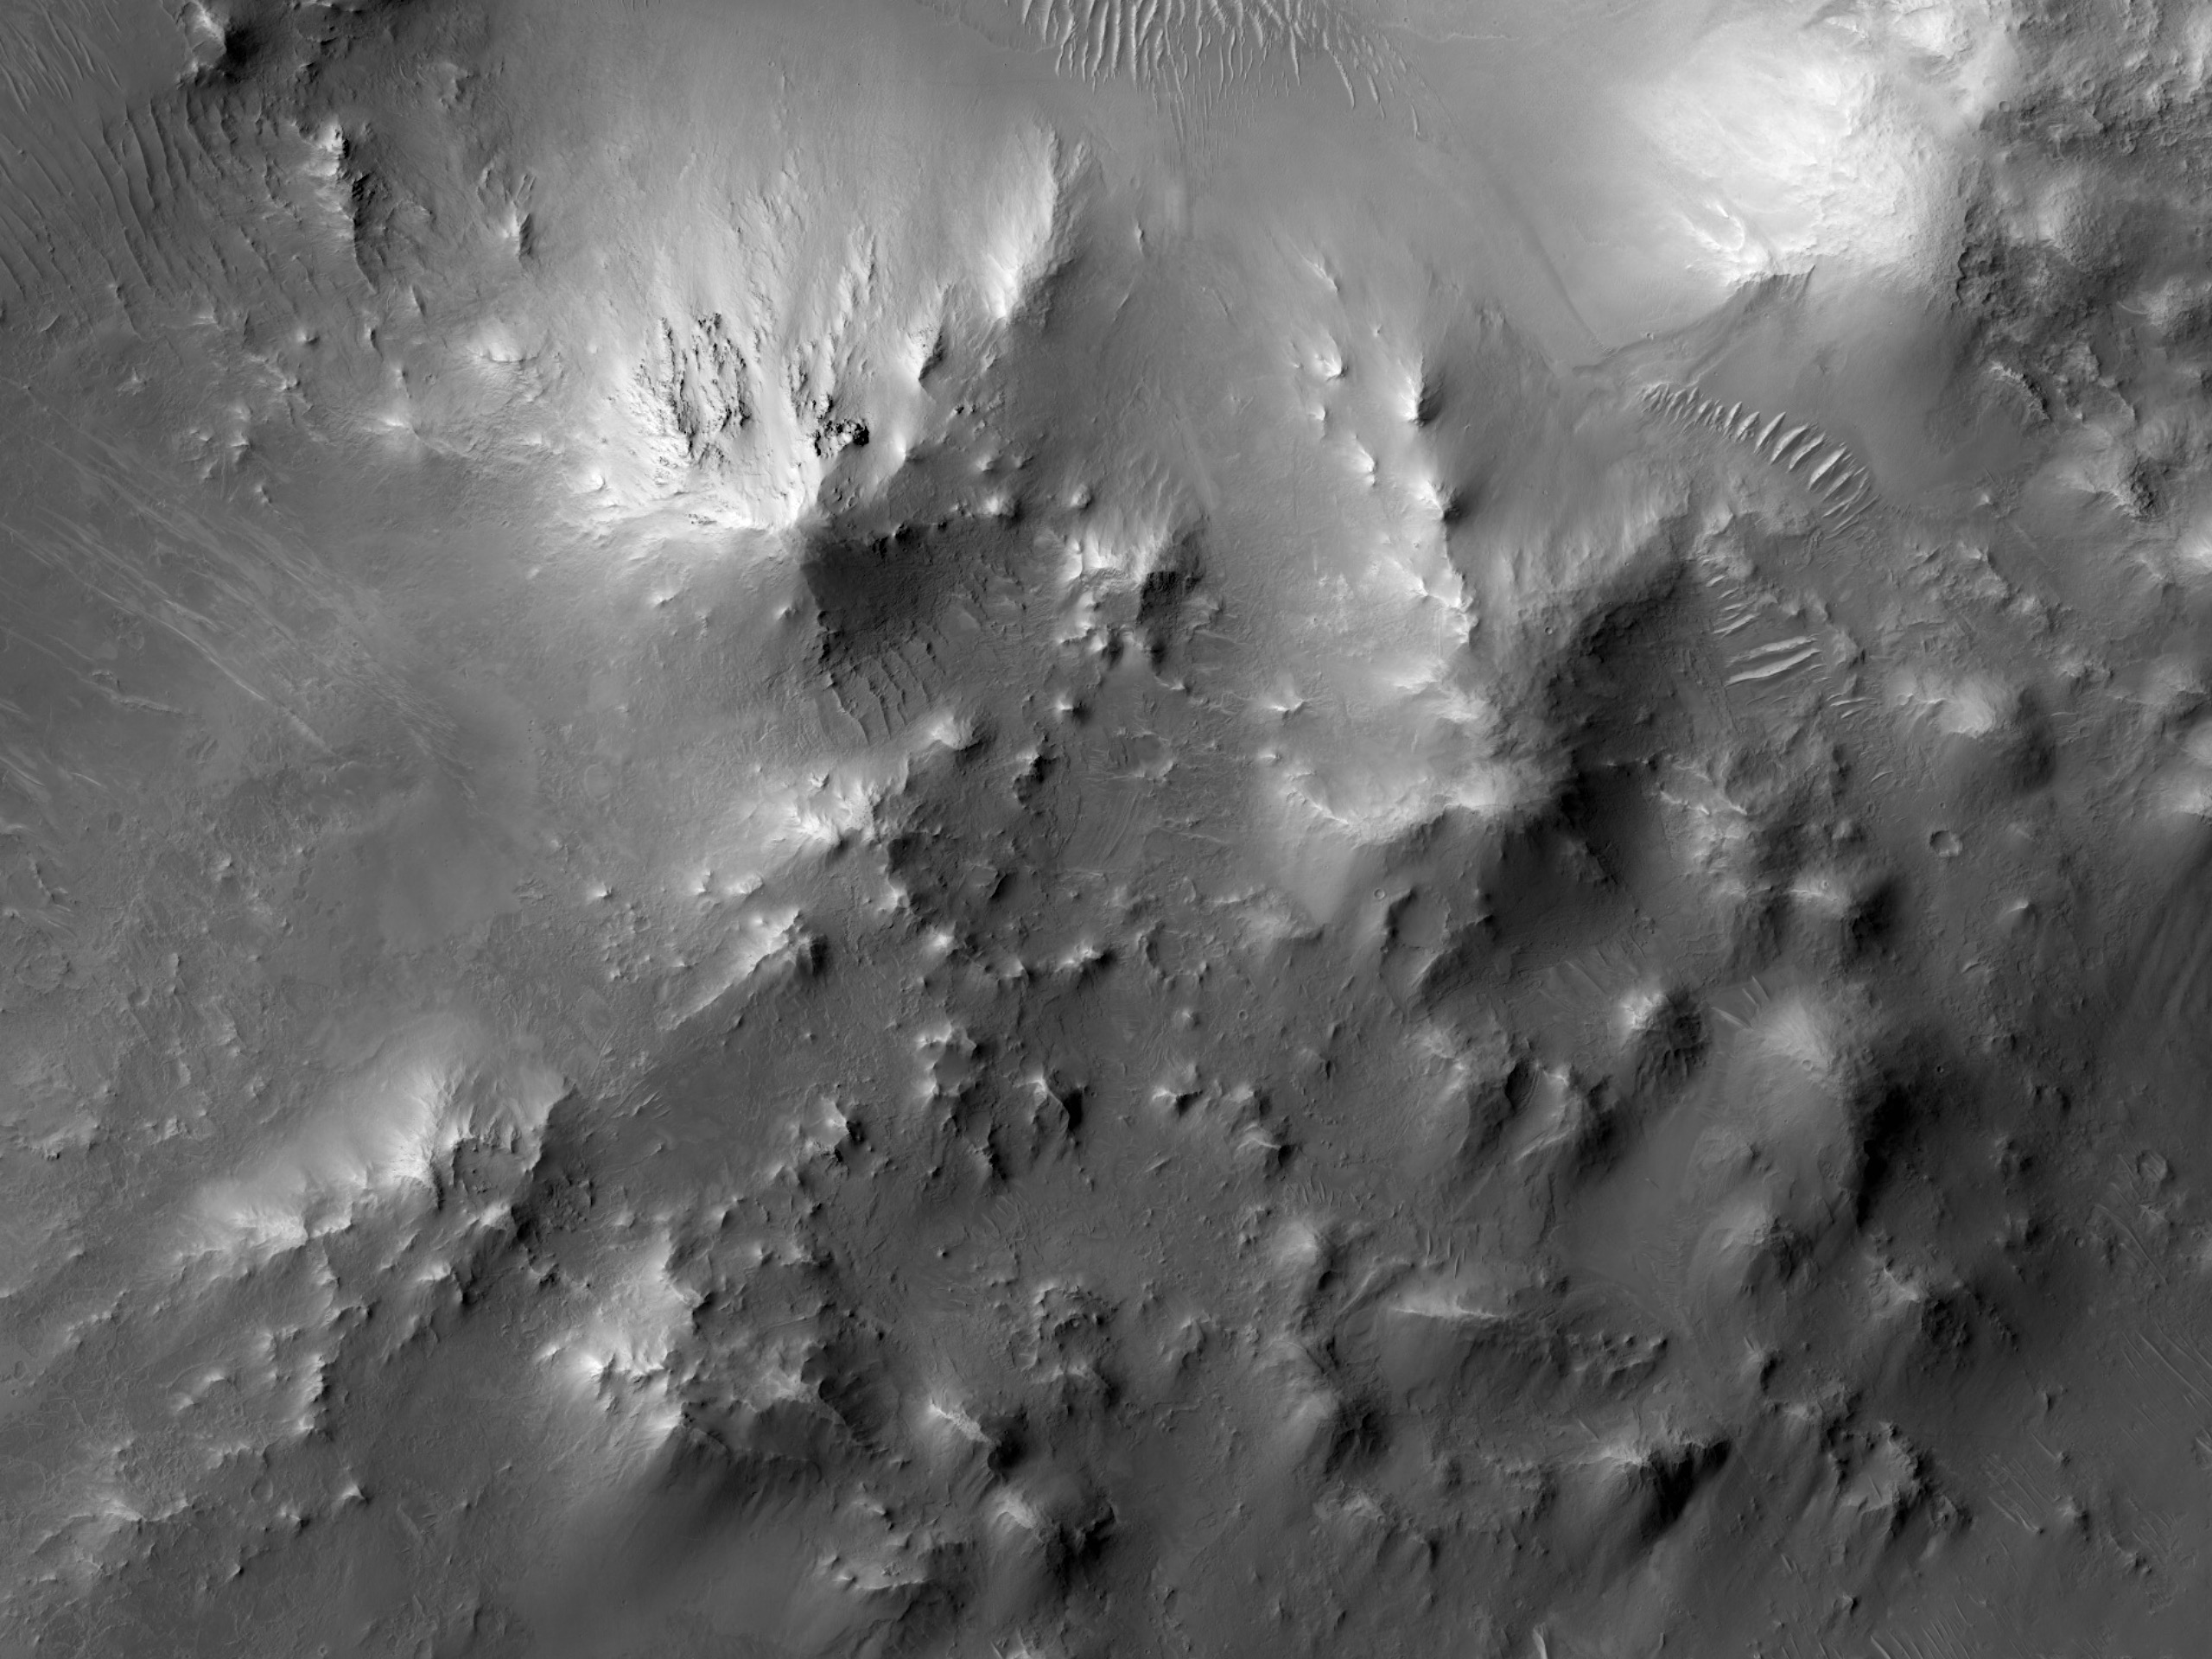 Central Uplift of a 60-Kilometer Diameter Crater